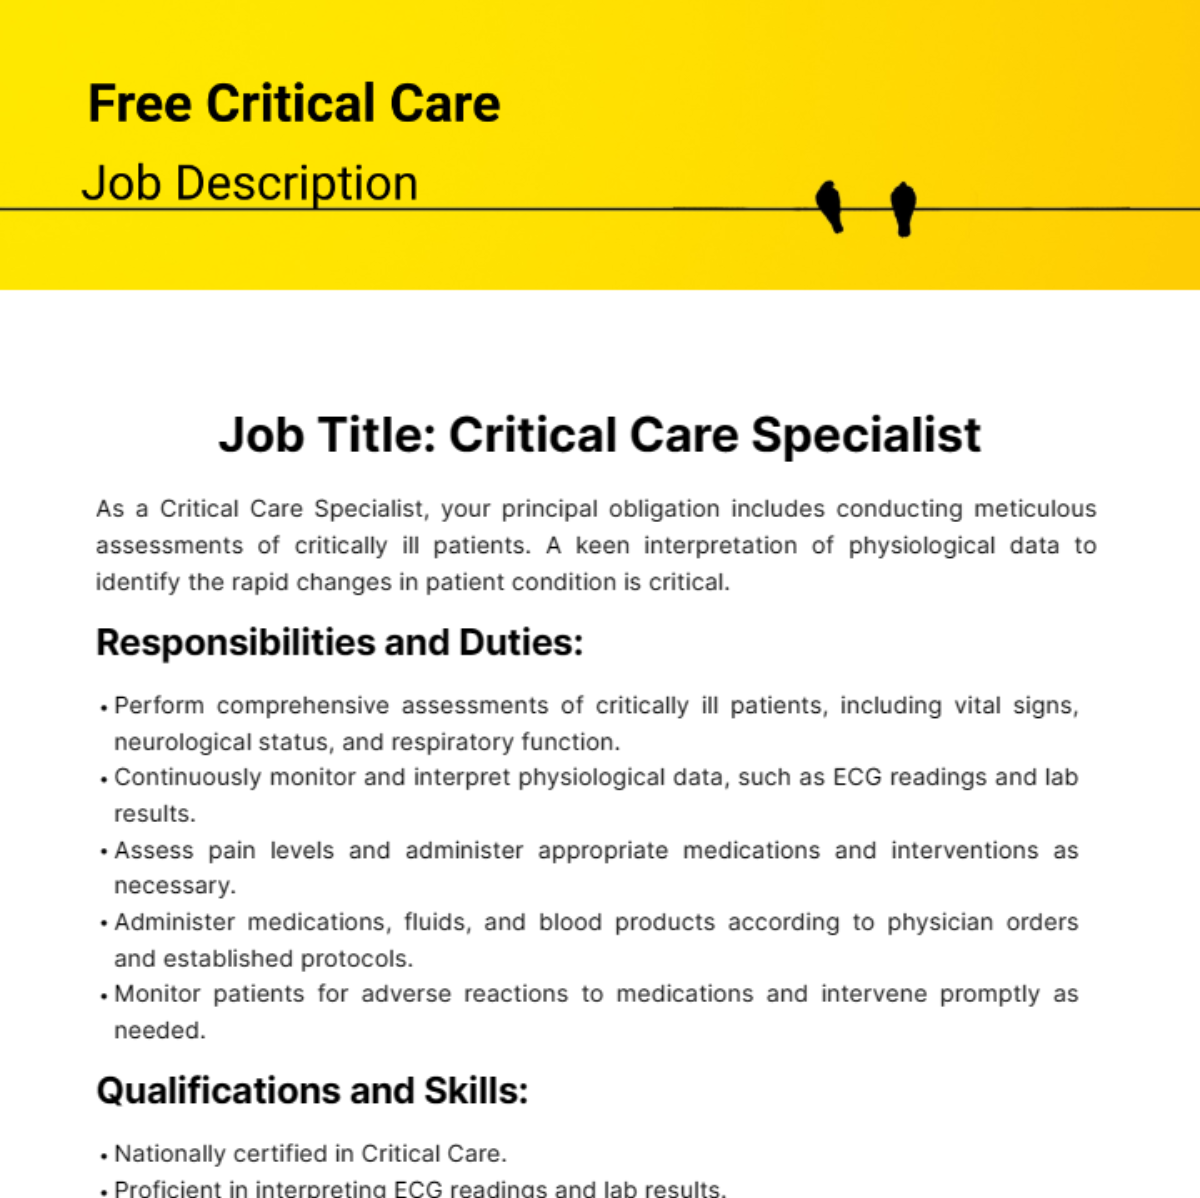 Free Critical Care Job Description Template